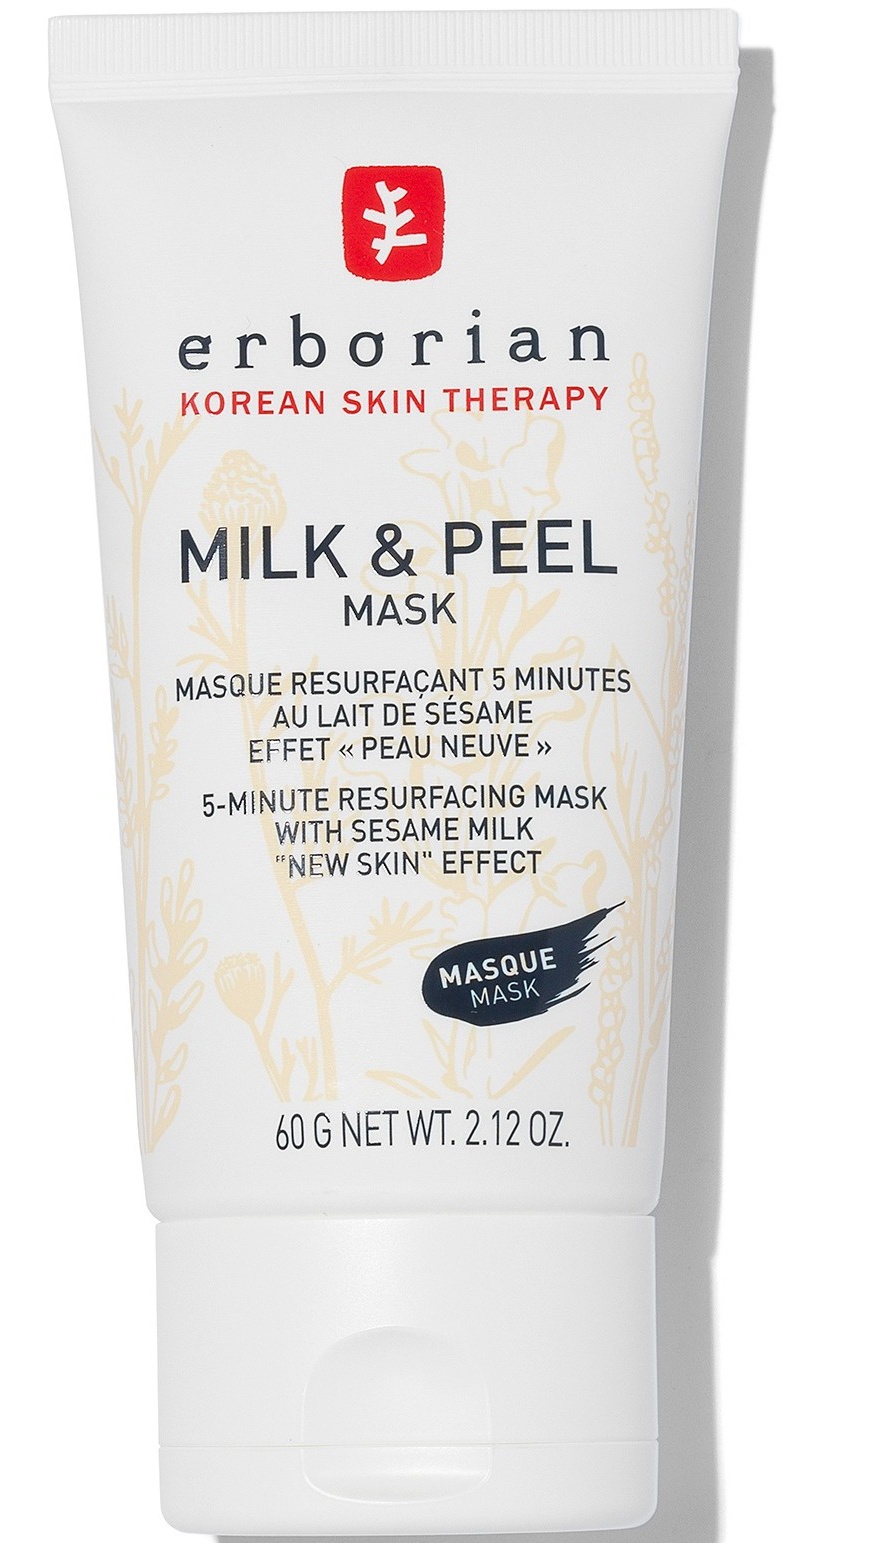 Erborian Milk And Peel Mask ingredients (Explained)